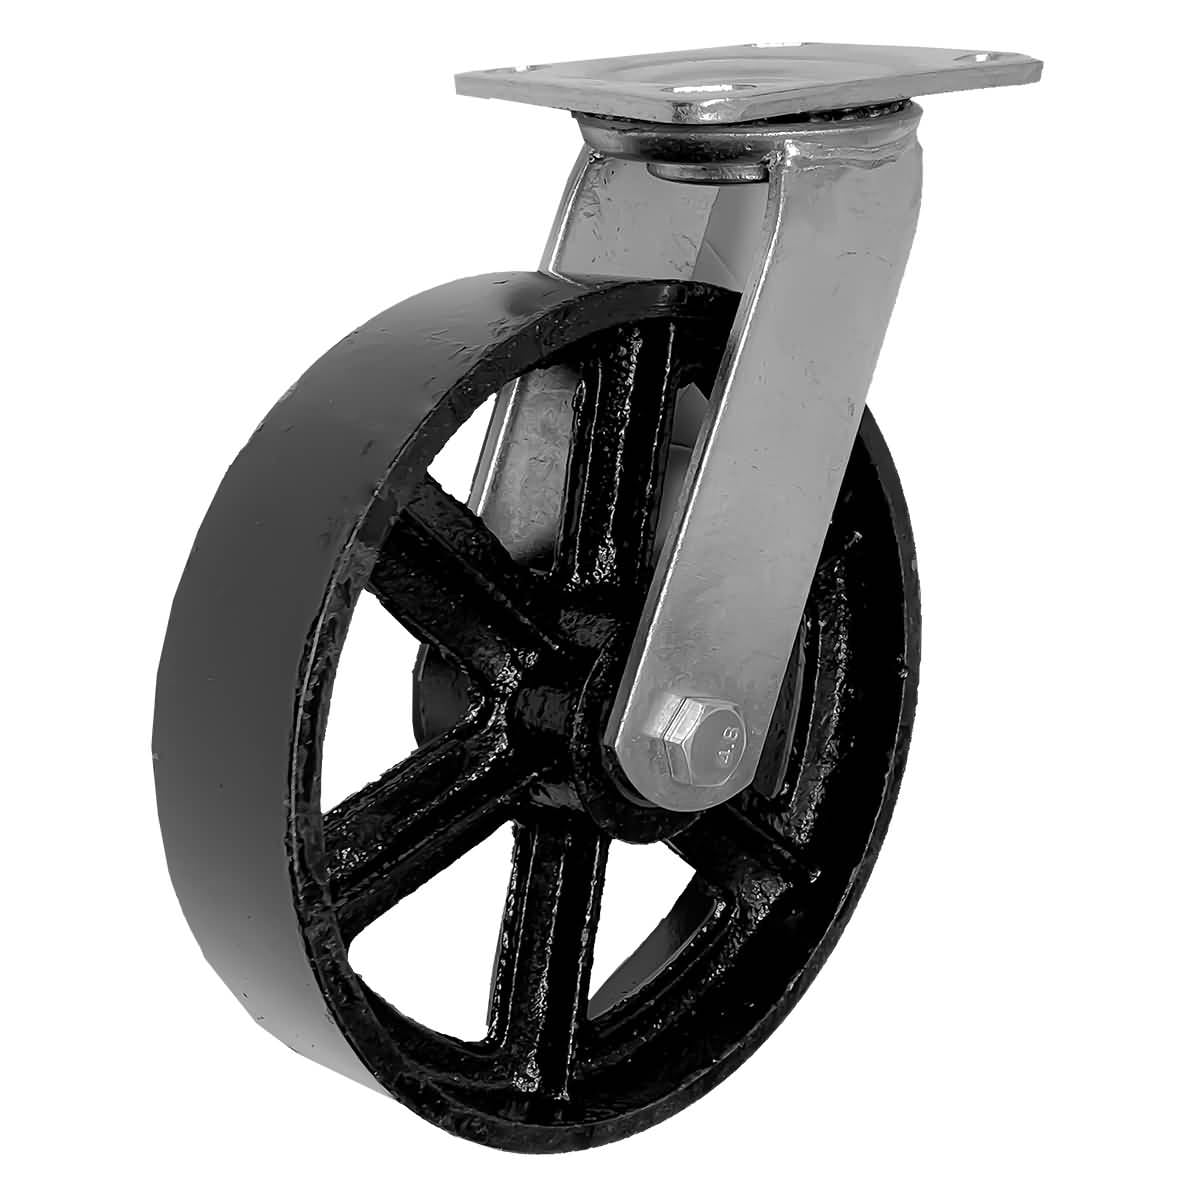 Vintage 2" Industrial Swivel CastersSet of 4Black Cast Iron Wheels 